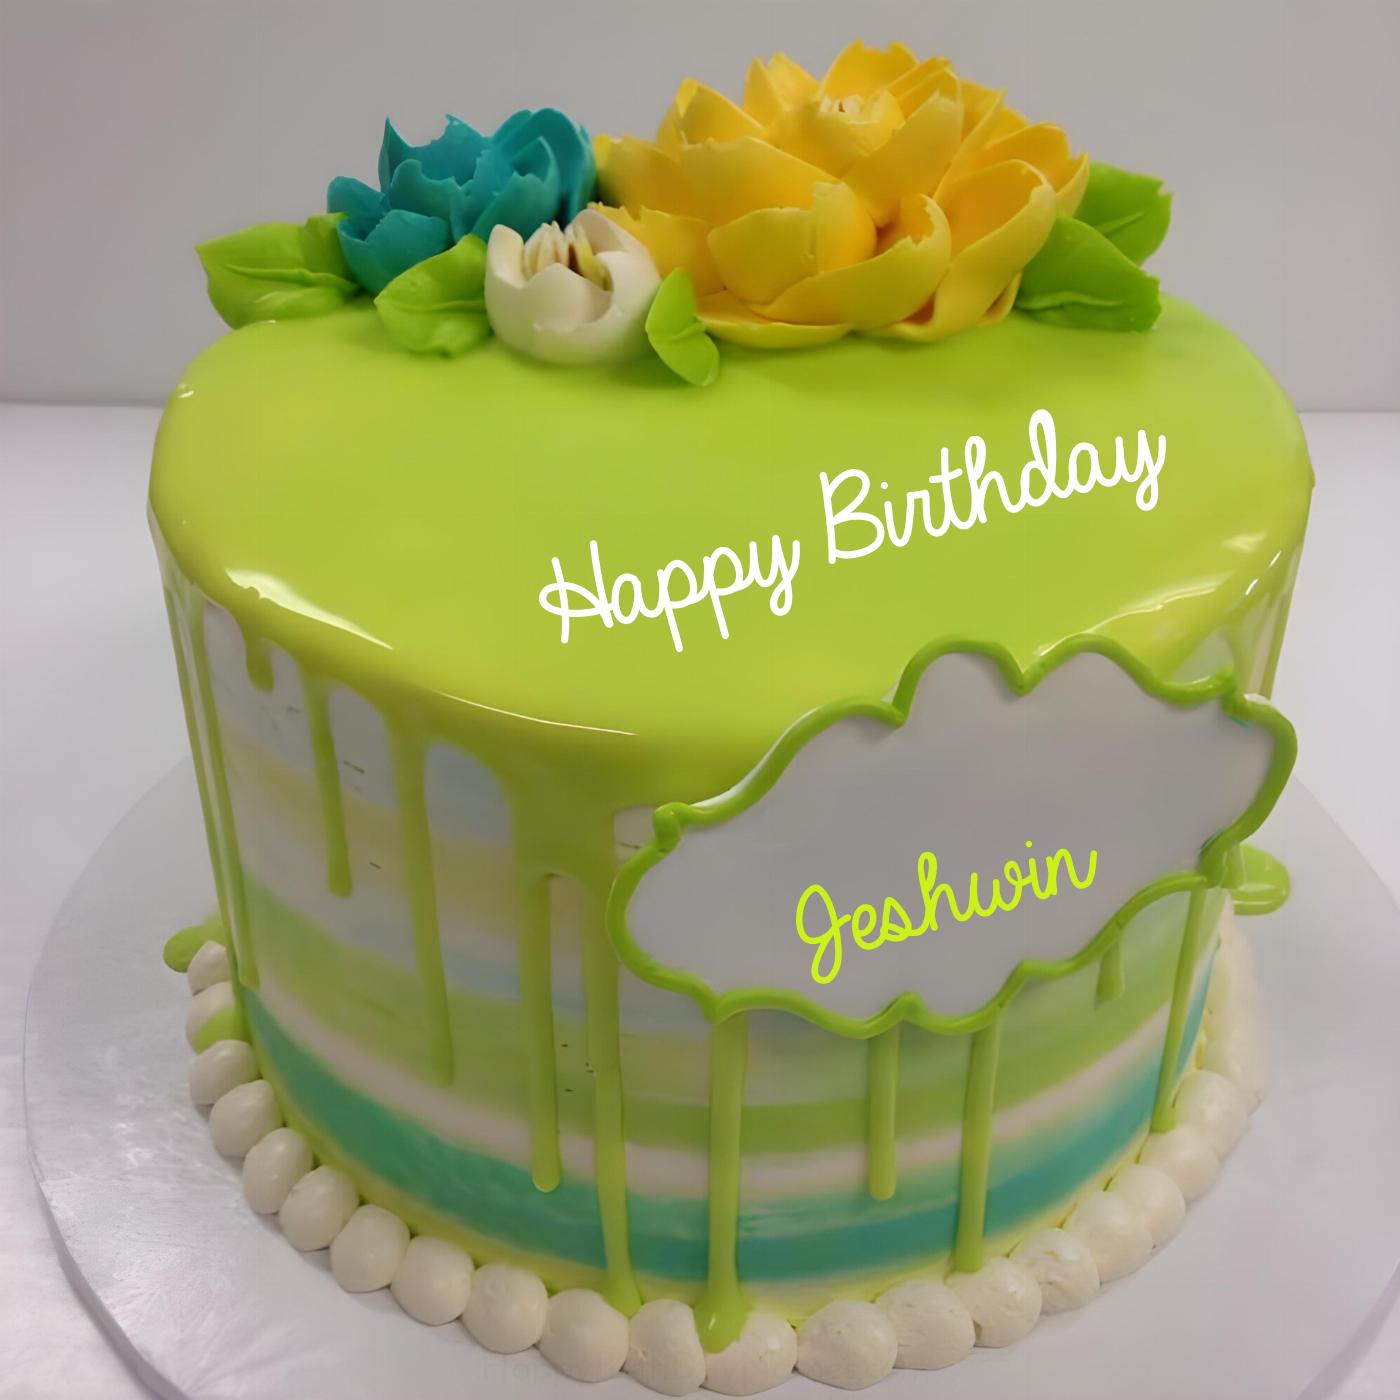 Happy Birthday Jeshwin Green Flowers Cake